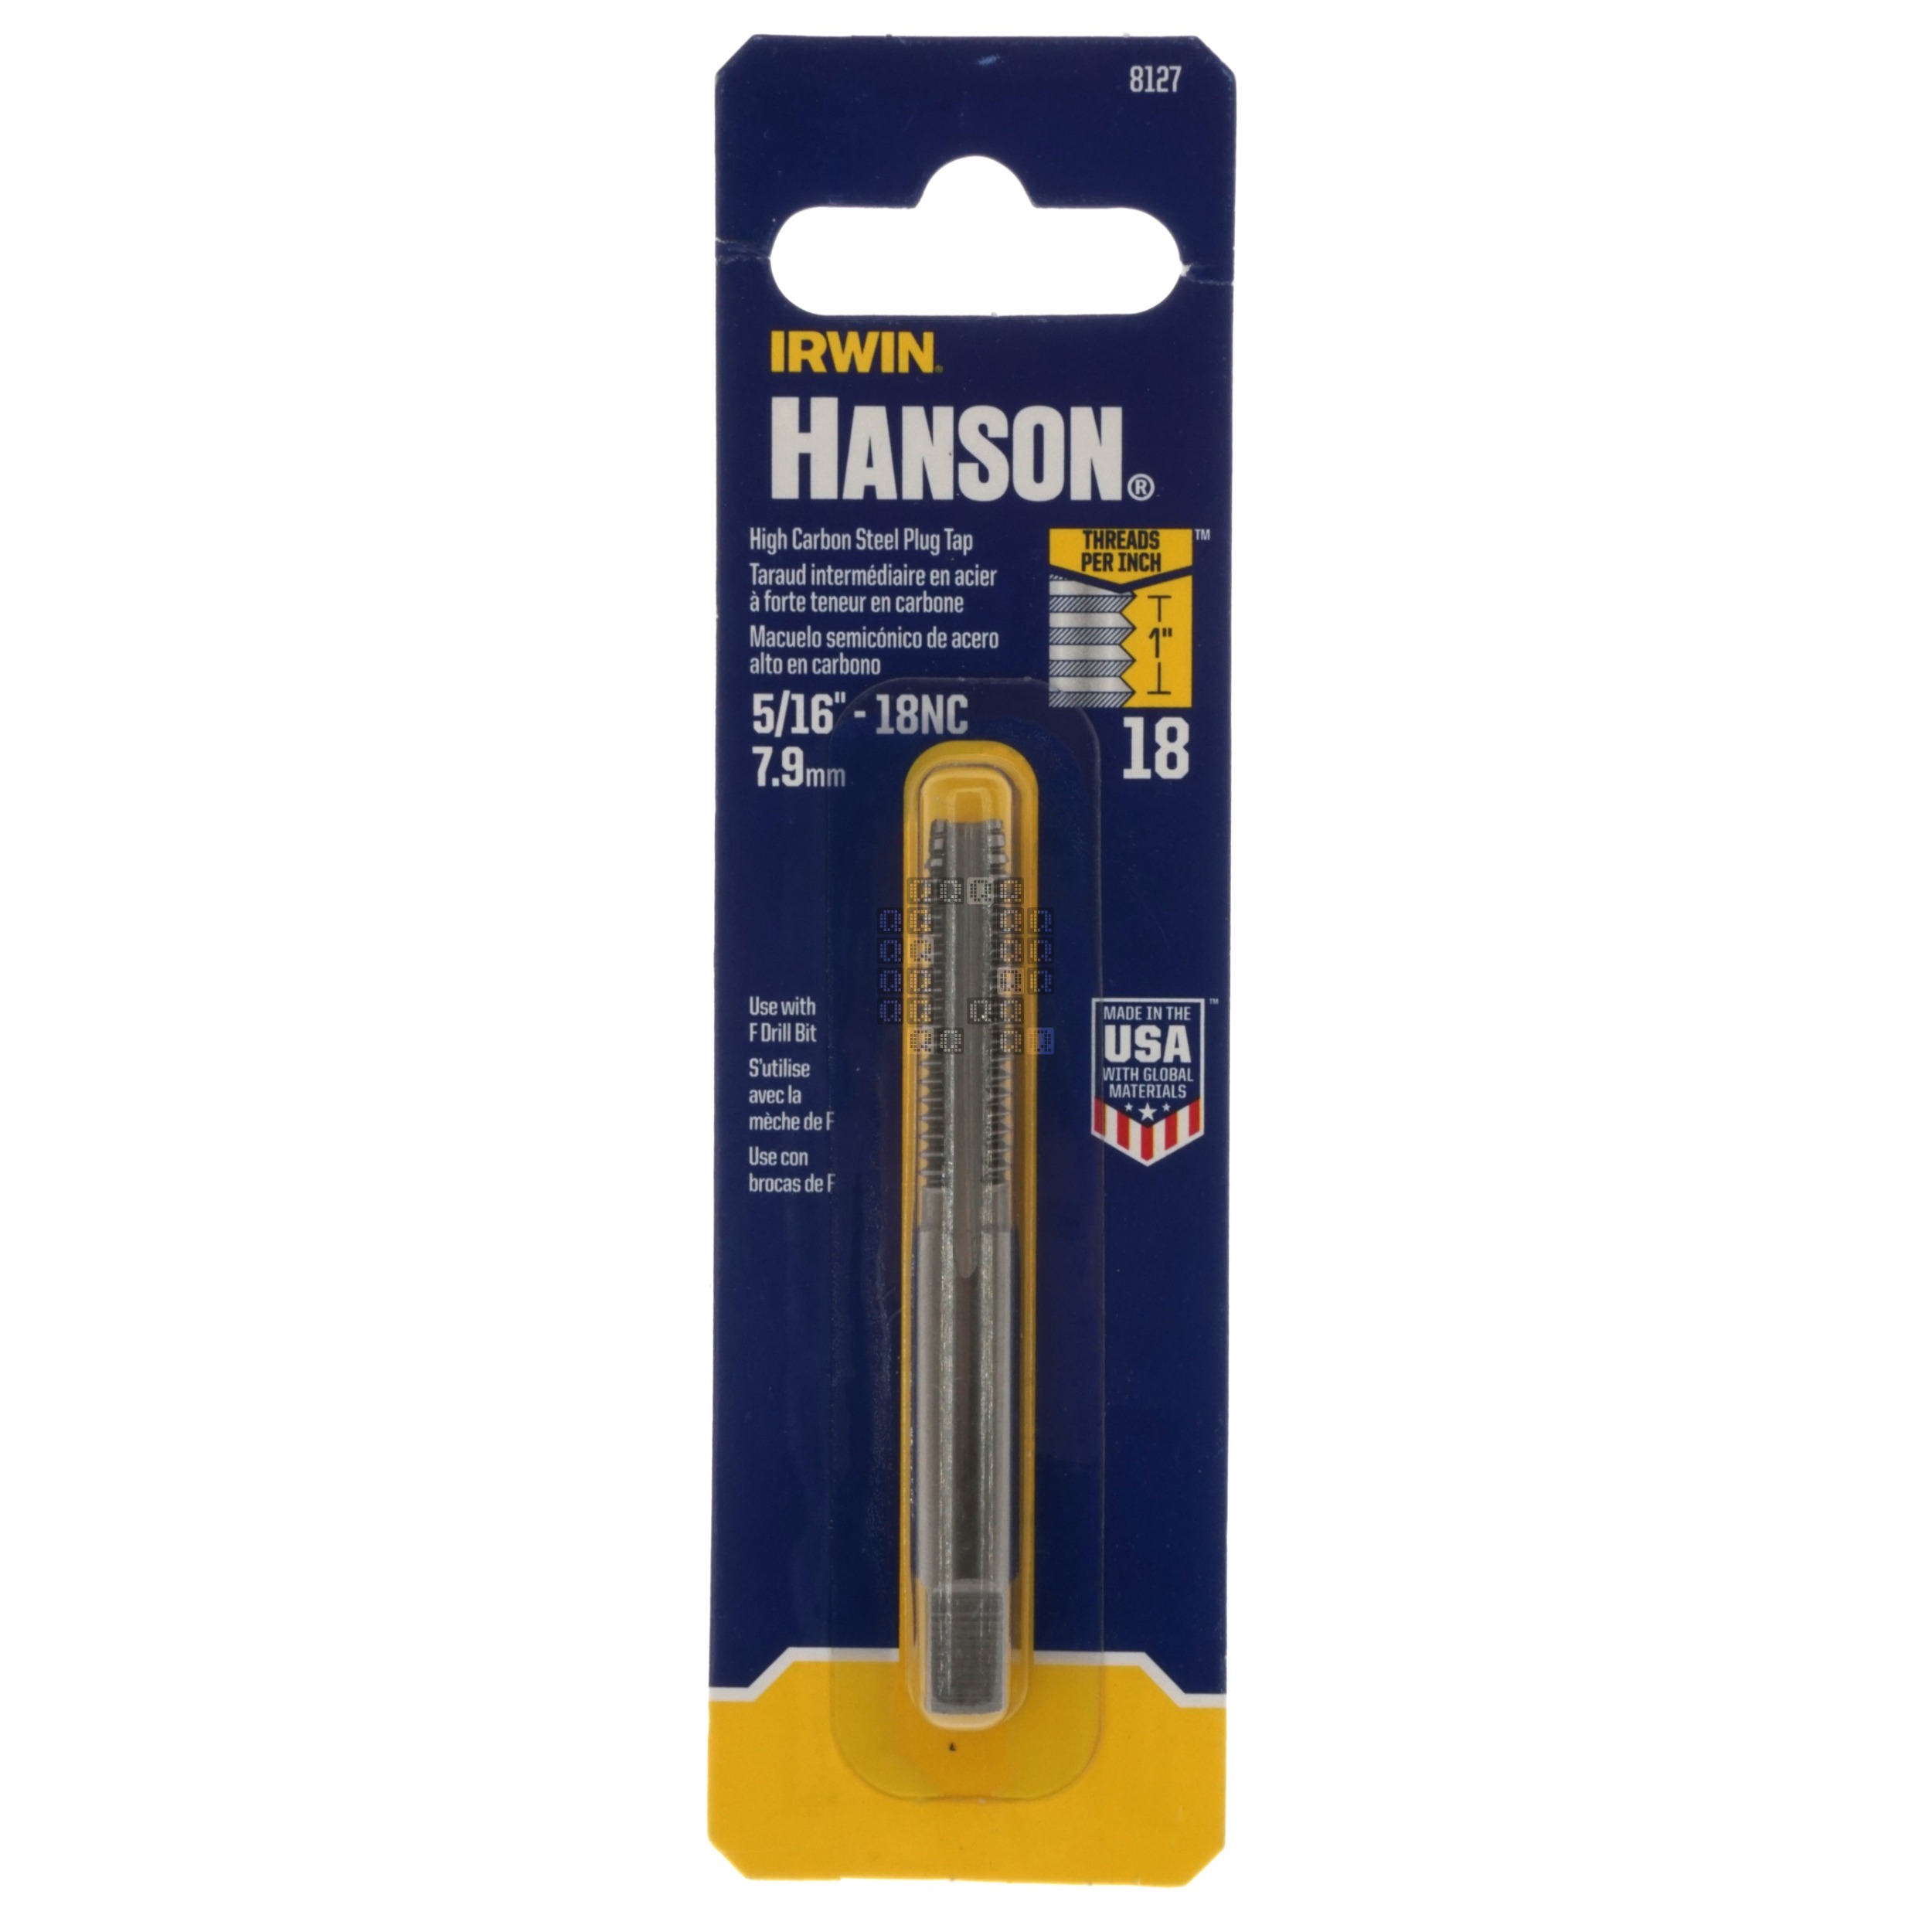 Irwin Hanson 8127 5/16" - 18NC High Carbon Steel Plug Tap